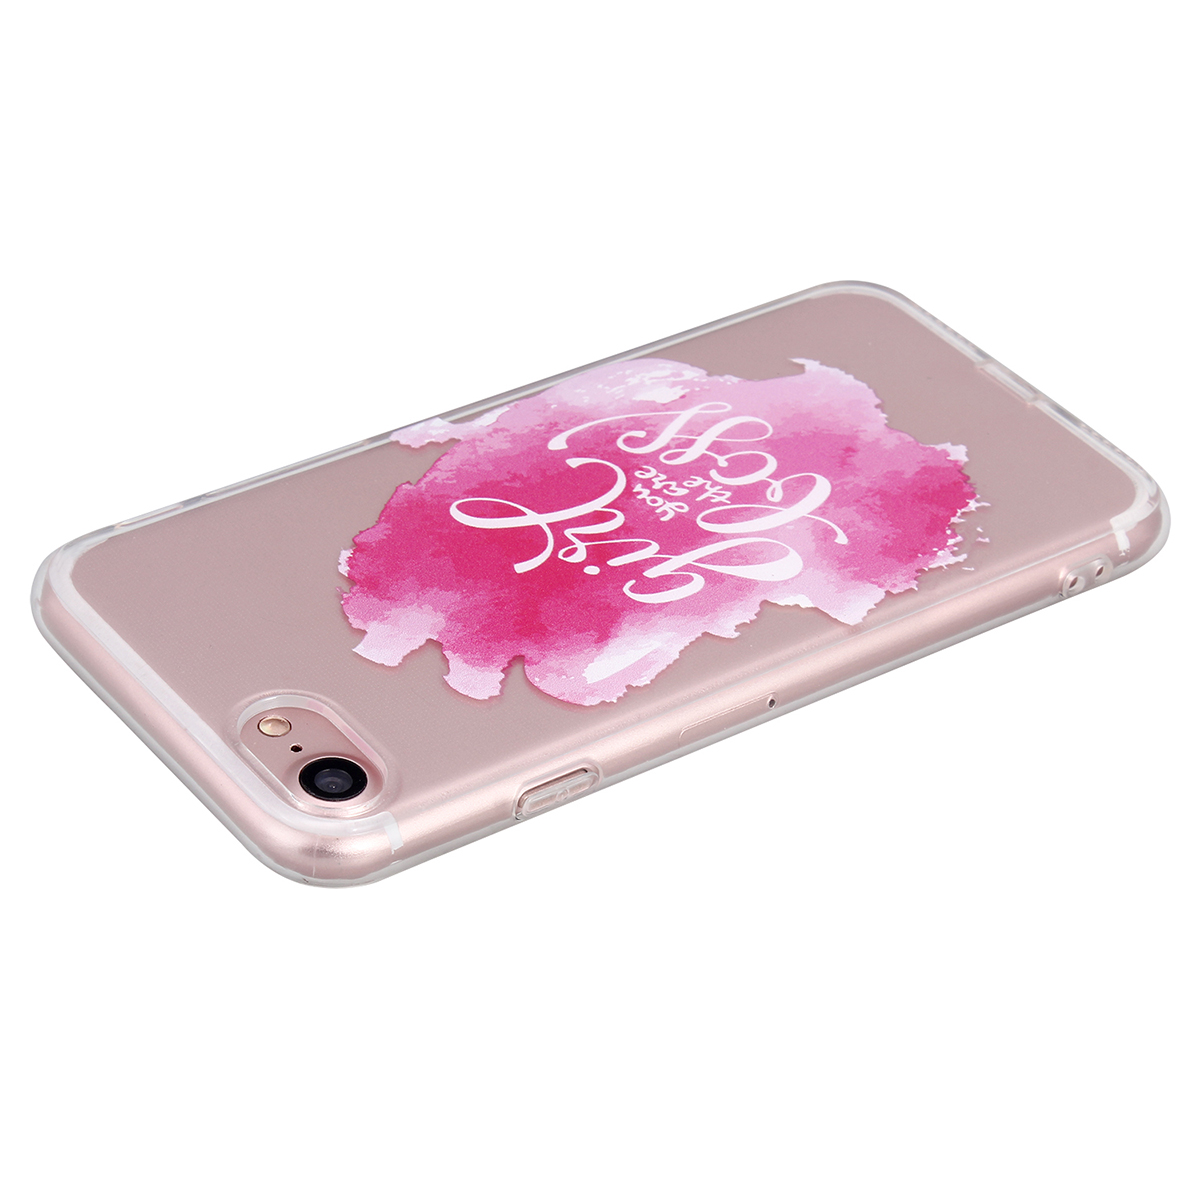 New Slim Soft TPU Transparent Printing Phone Case for iPhone 7 - Pink Scrawl